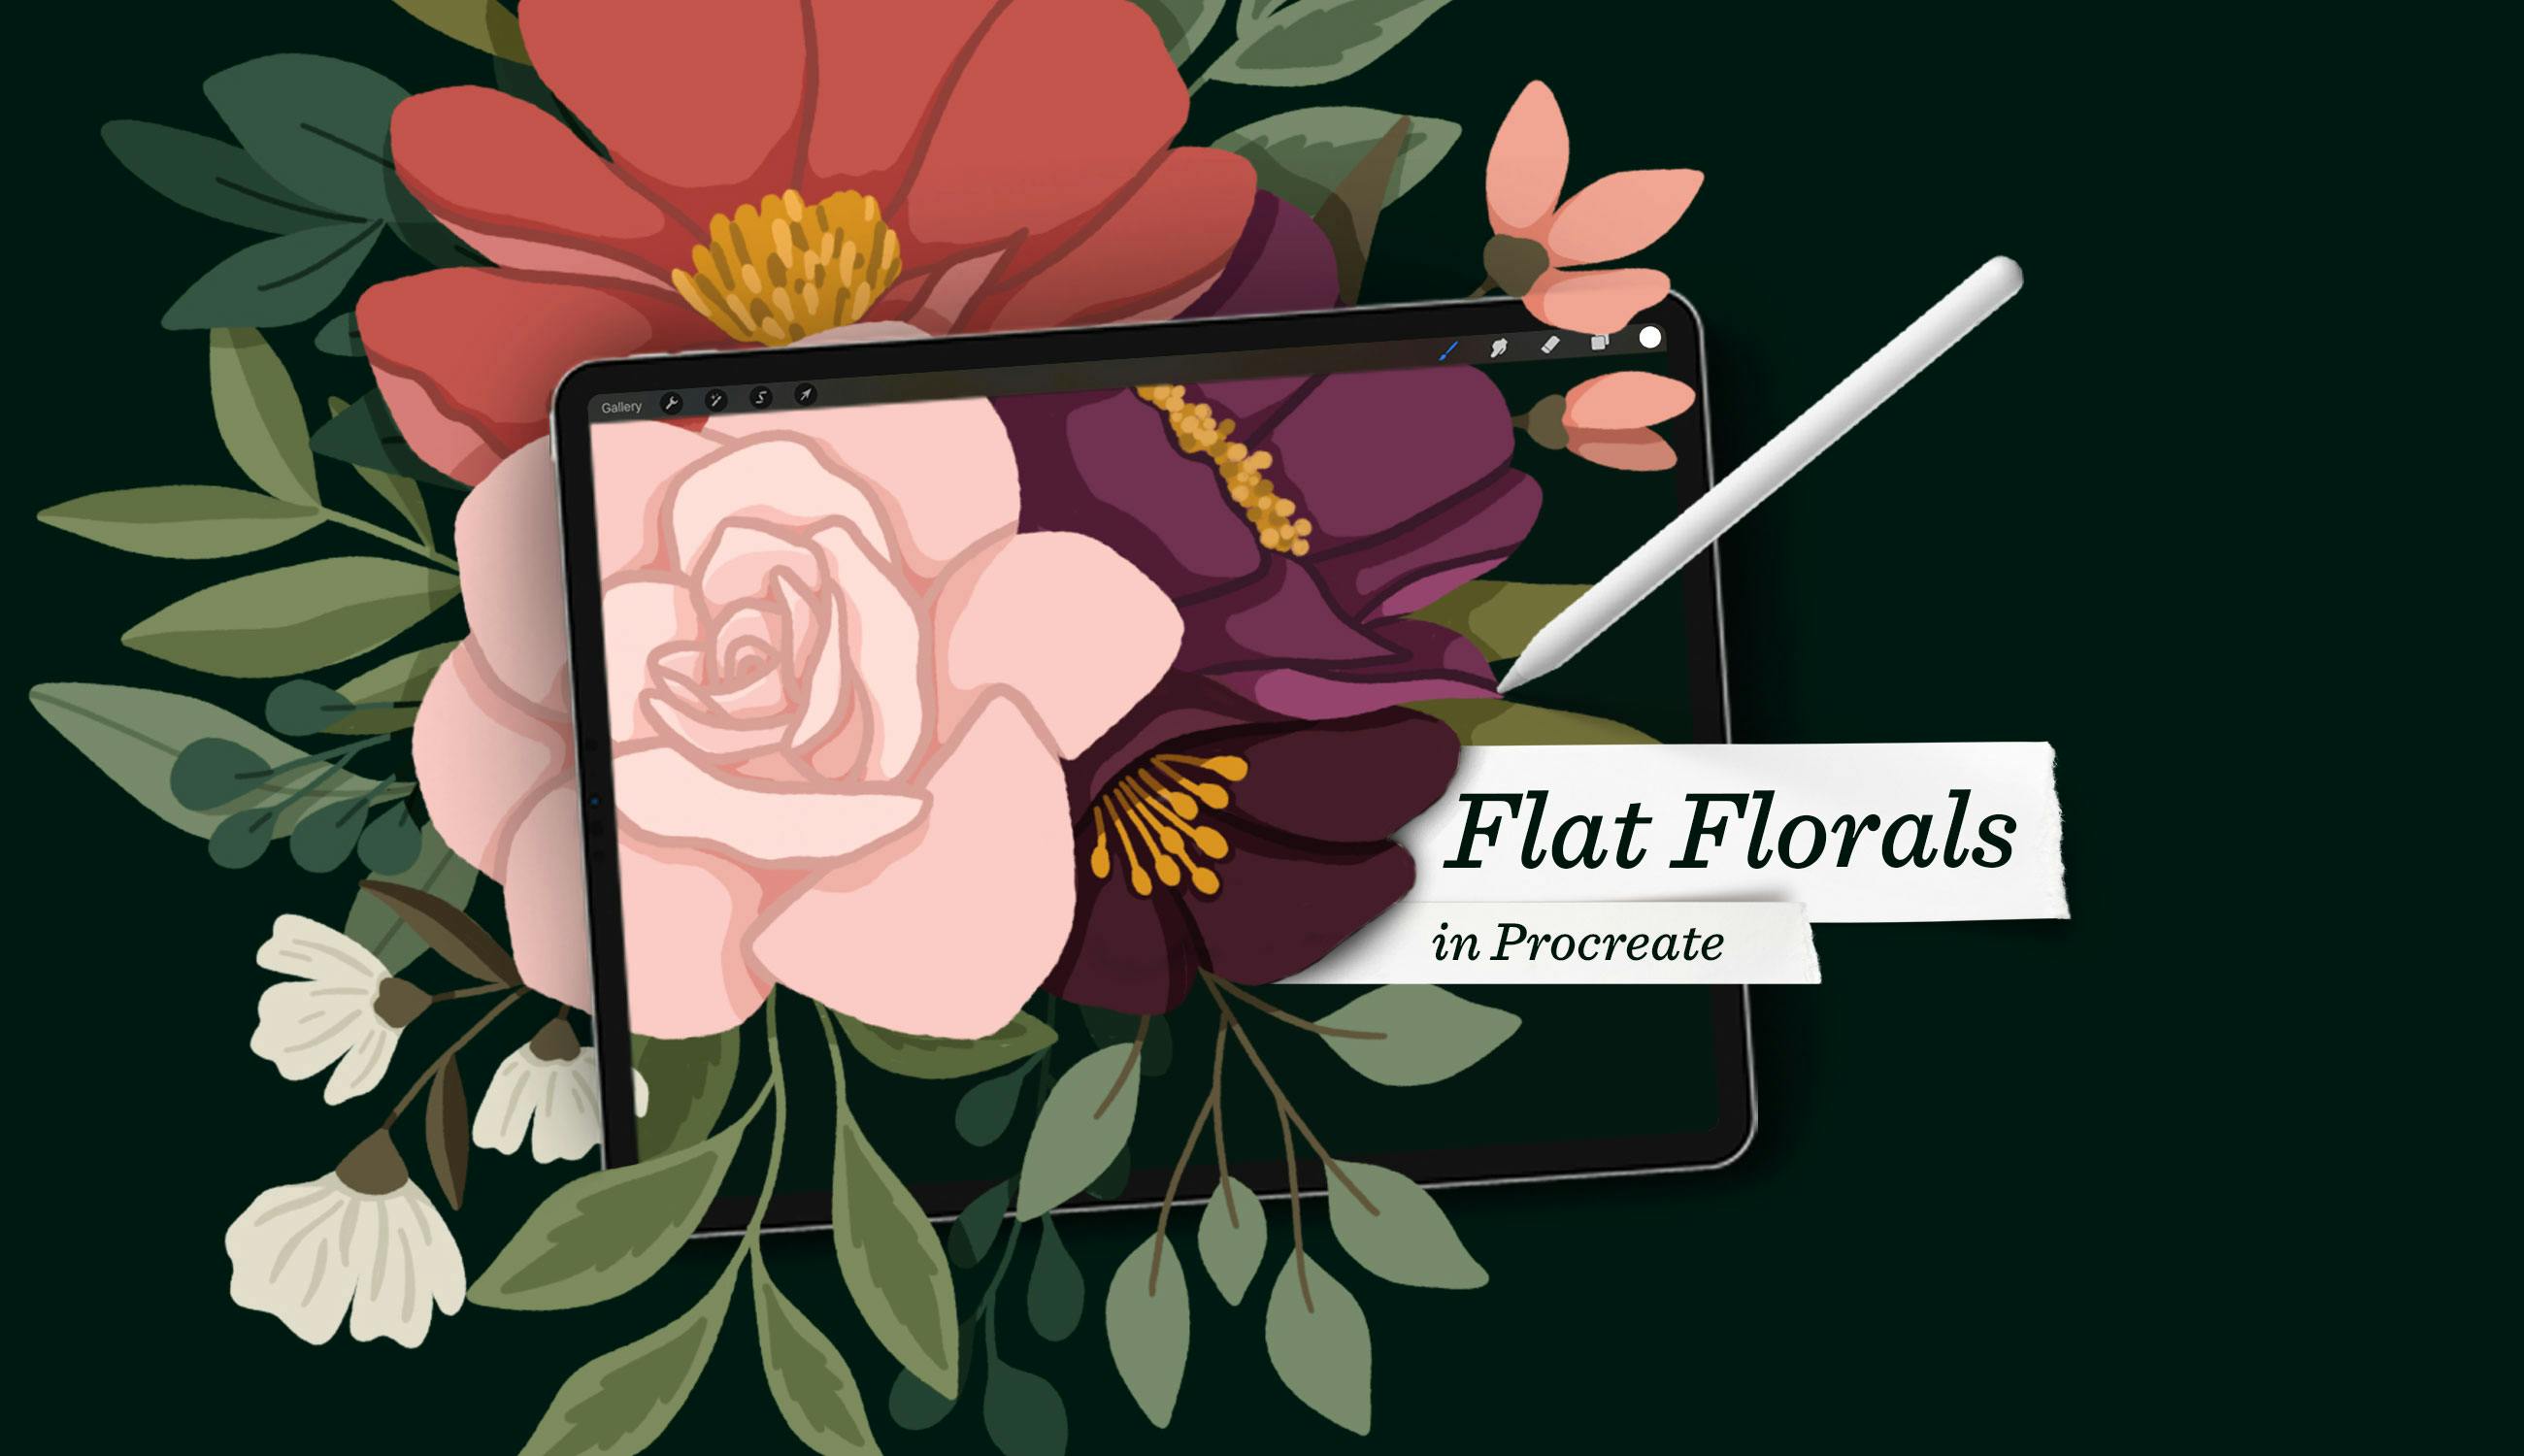 Flat Florals in Procreate by Teela Cunningham